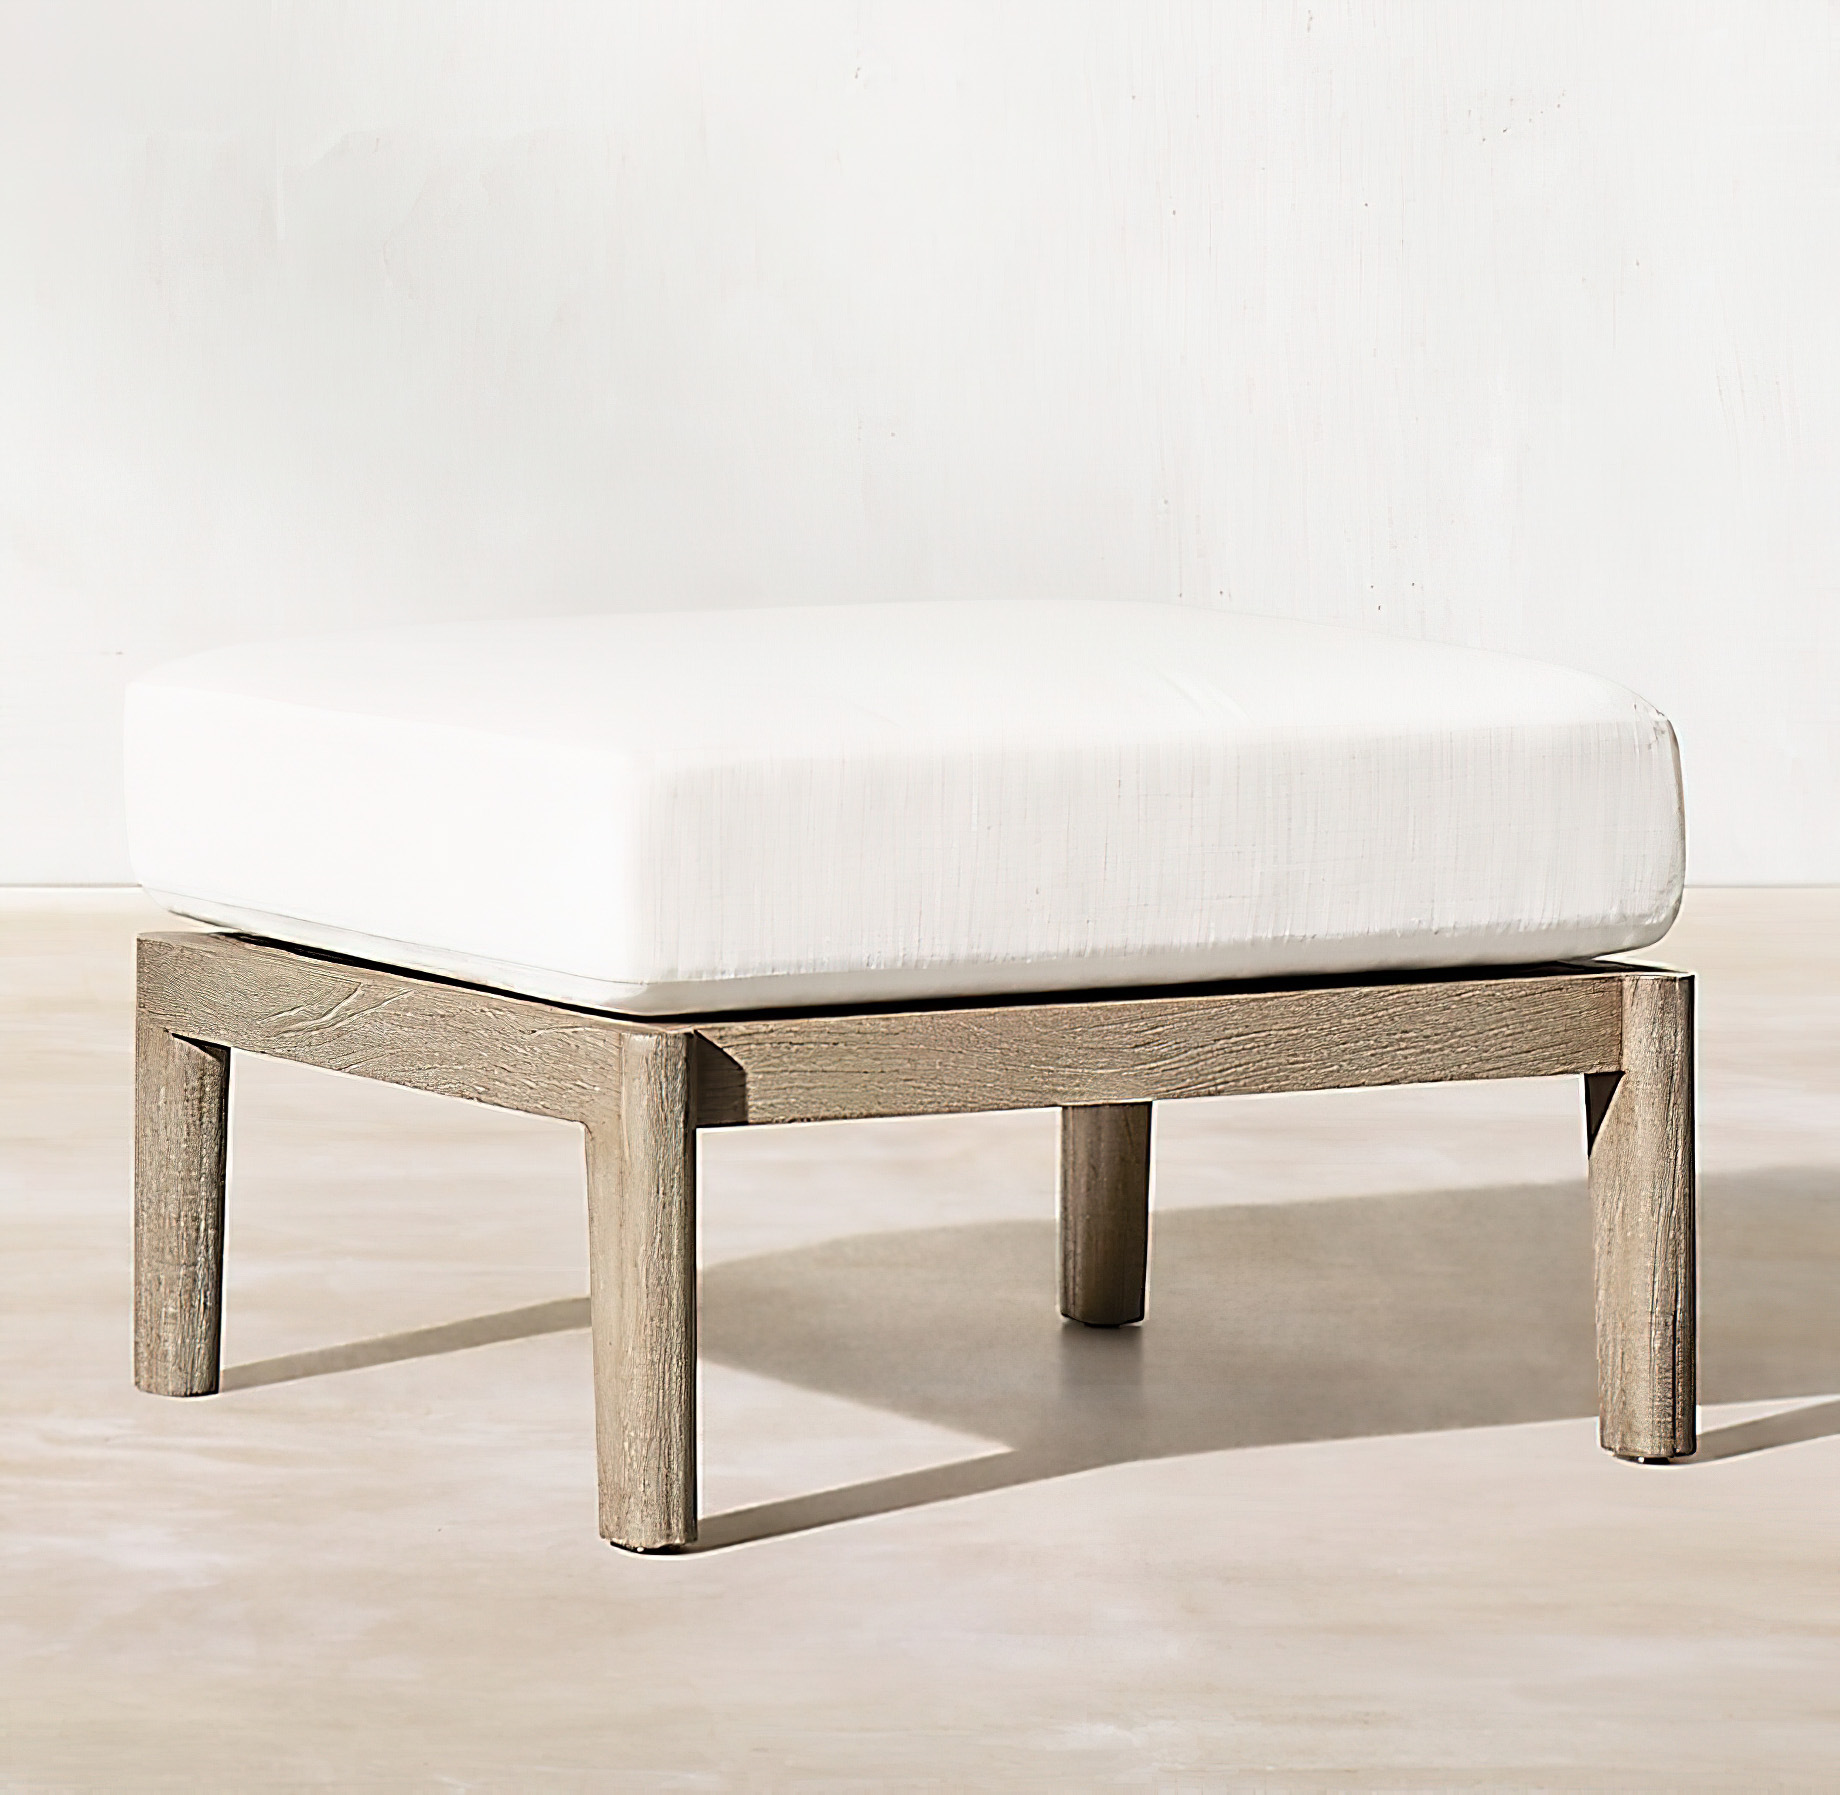 Malta Teak Collection Outdoor Furniture Design for RH – Ramon Esteve – Malta Teak Ottoman